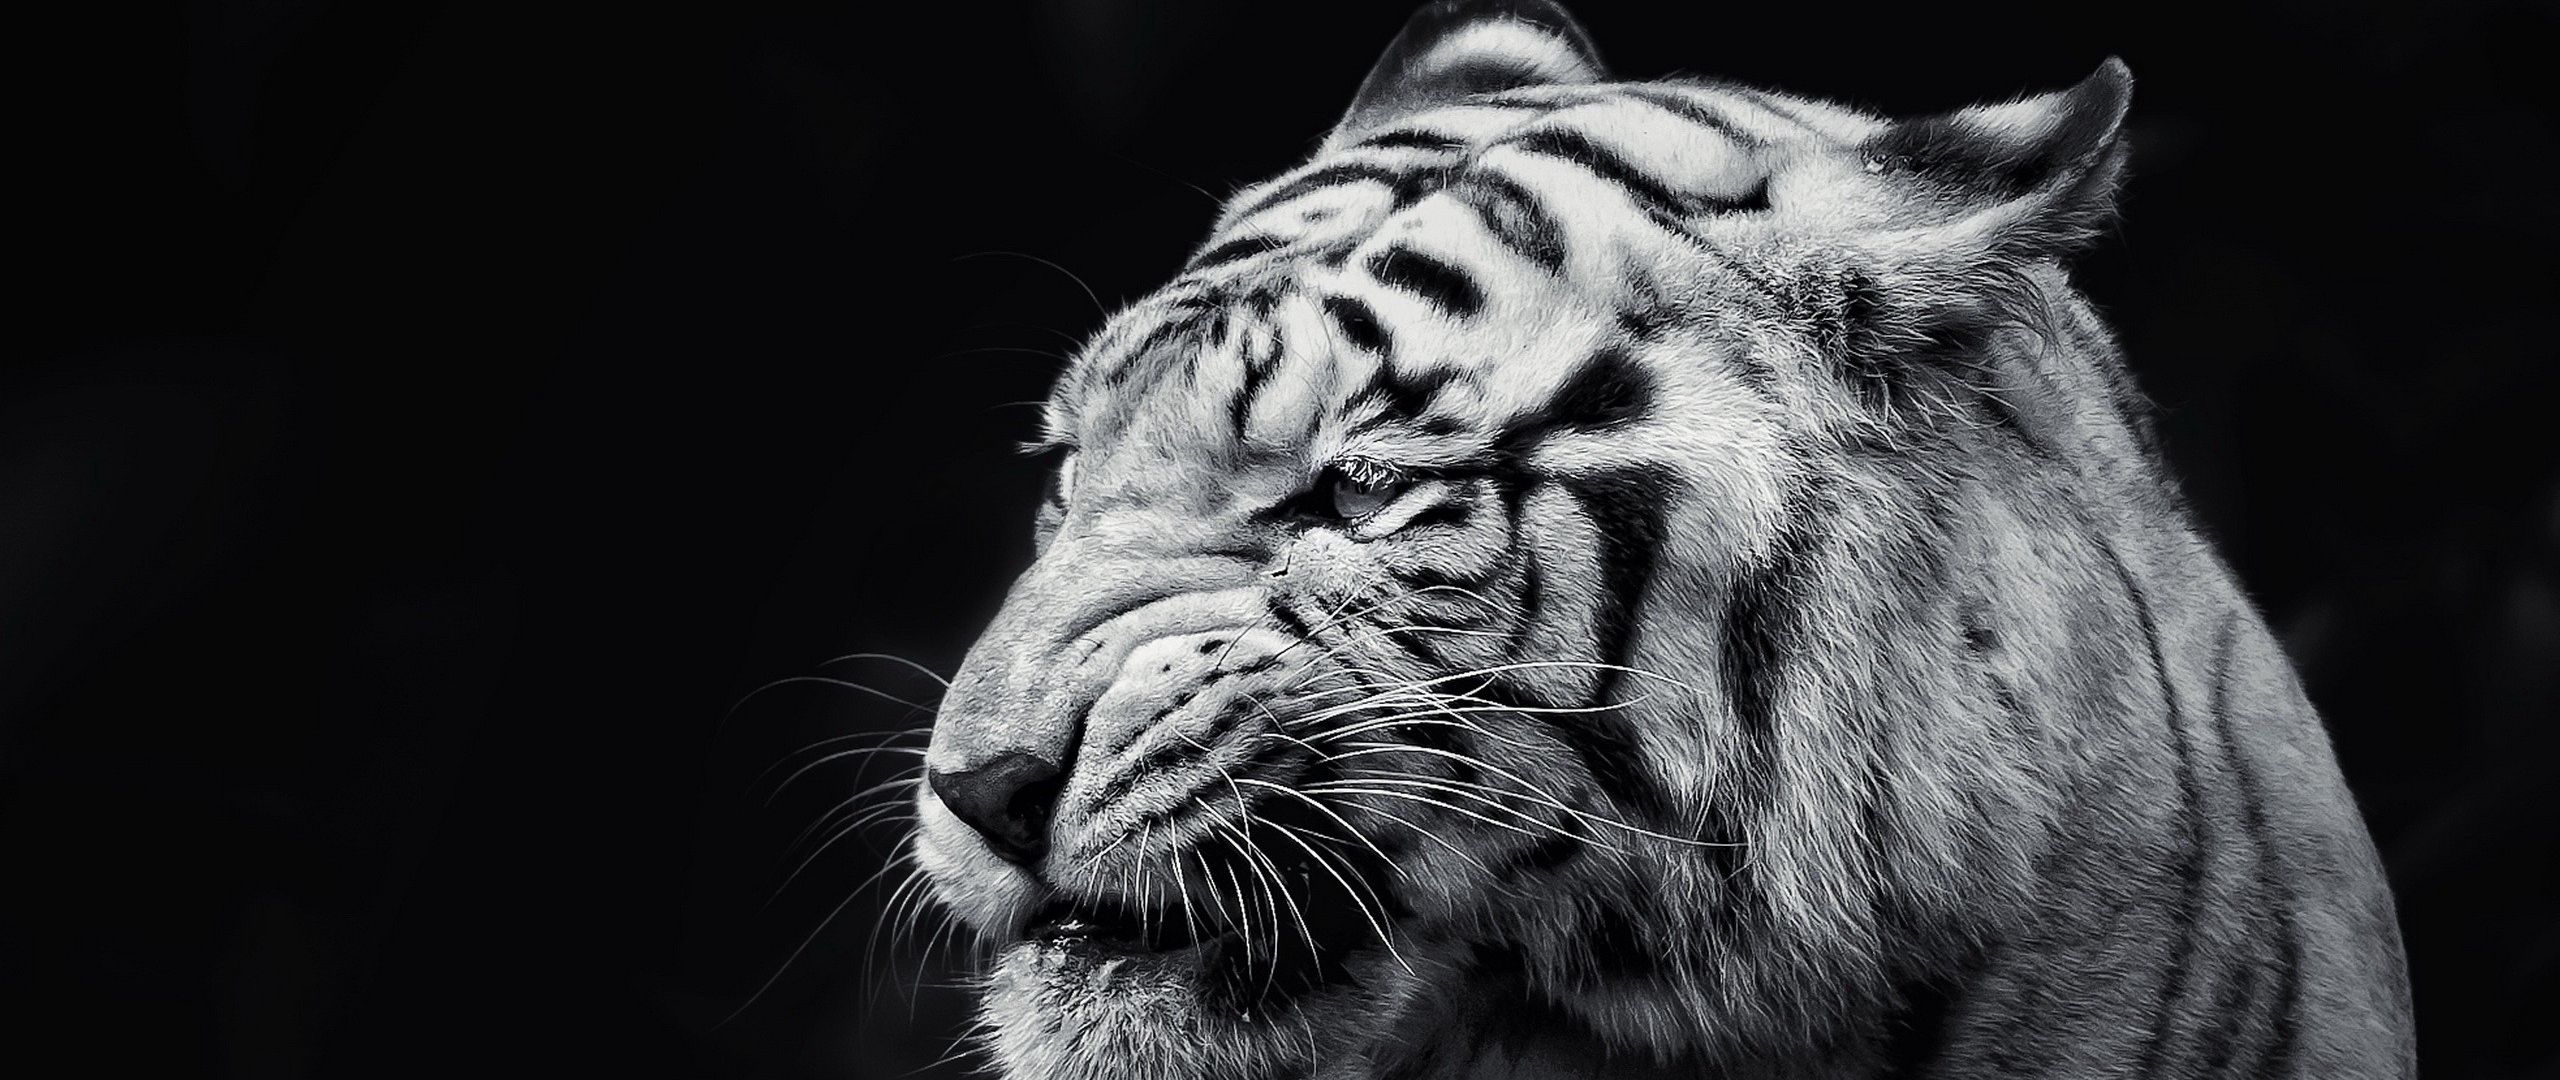 Белый тигр на черном фоне